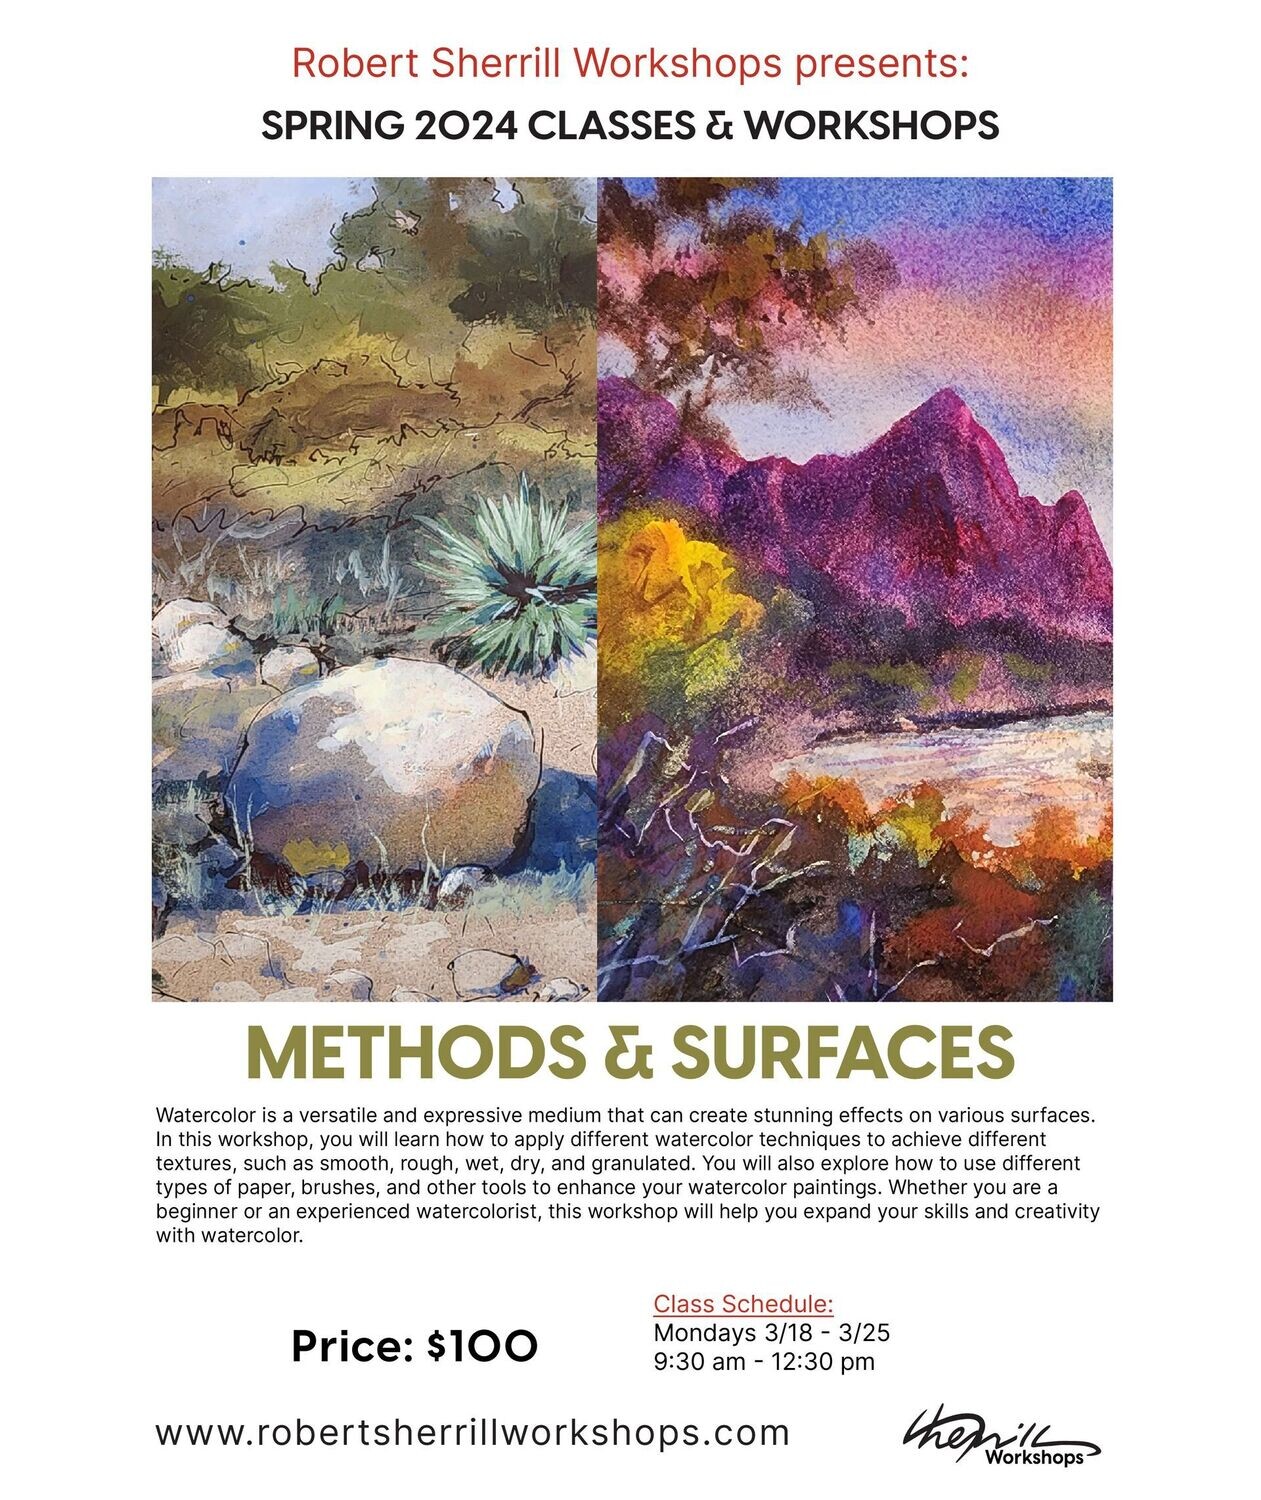 Methods & Surfaces Workshop